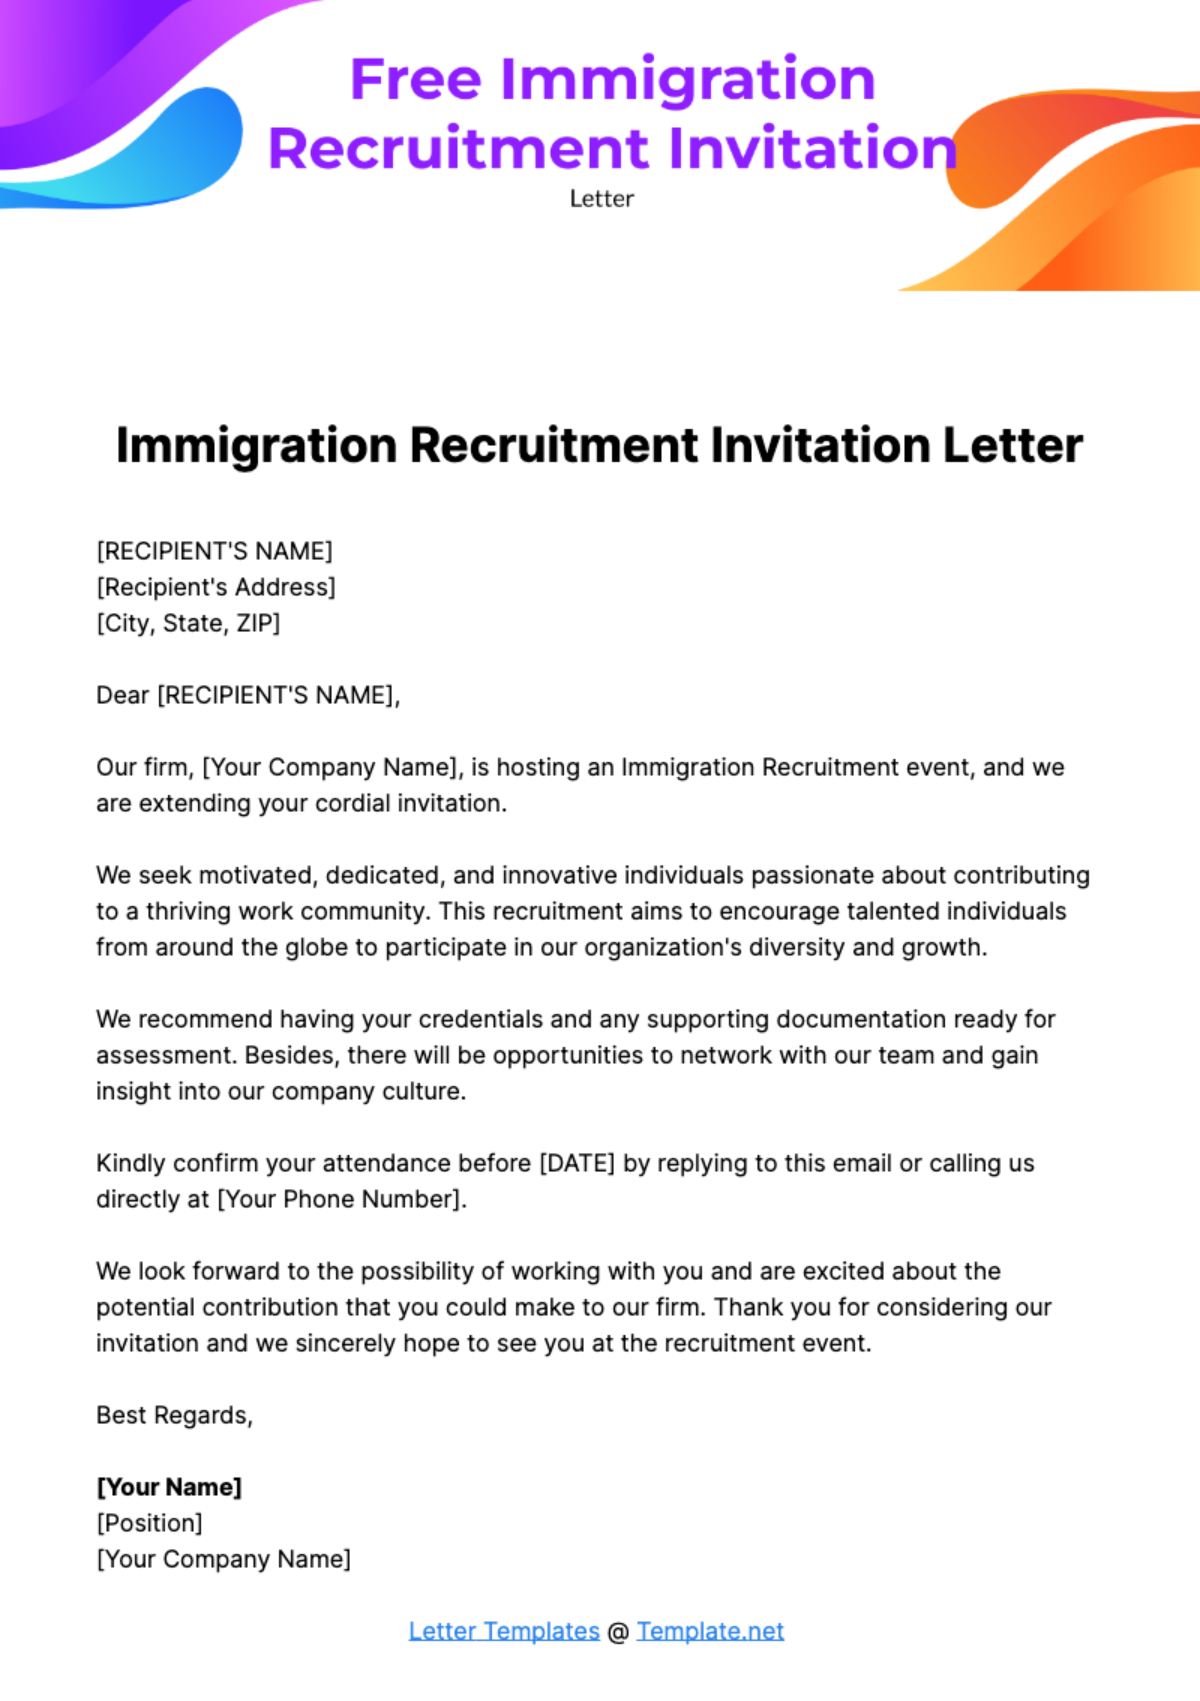 Free Immigration Recruitment Invitation Letter  Template